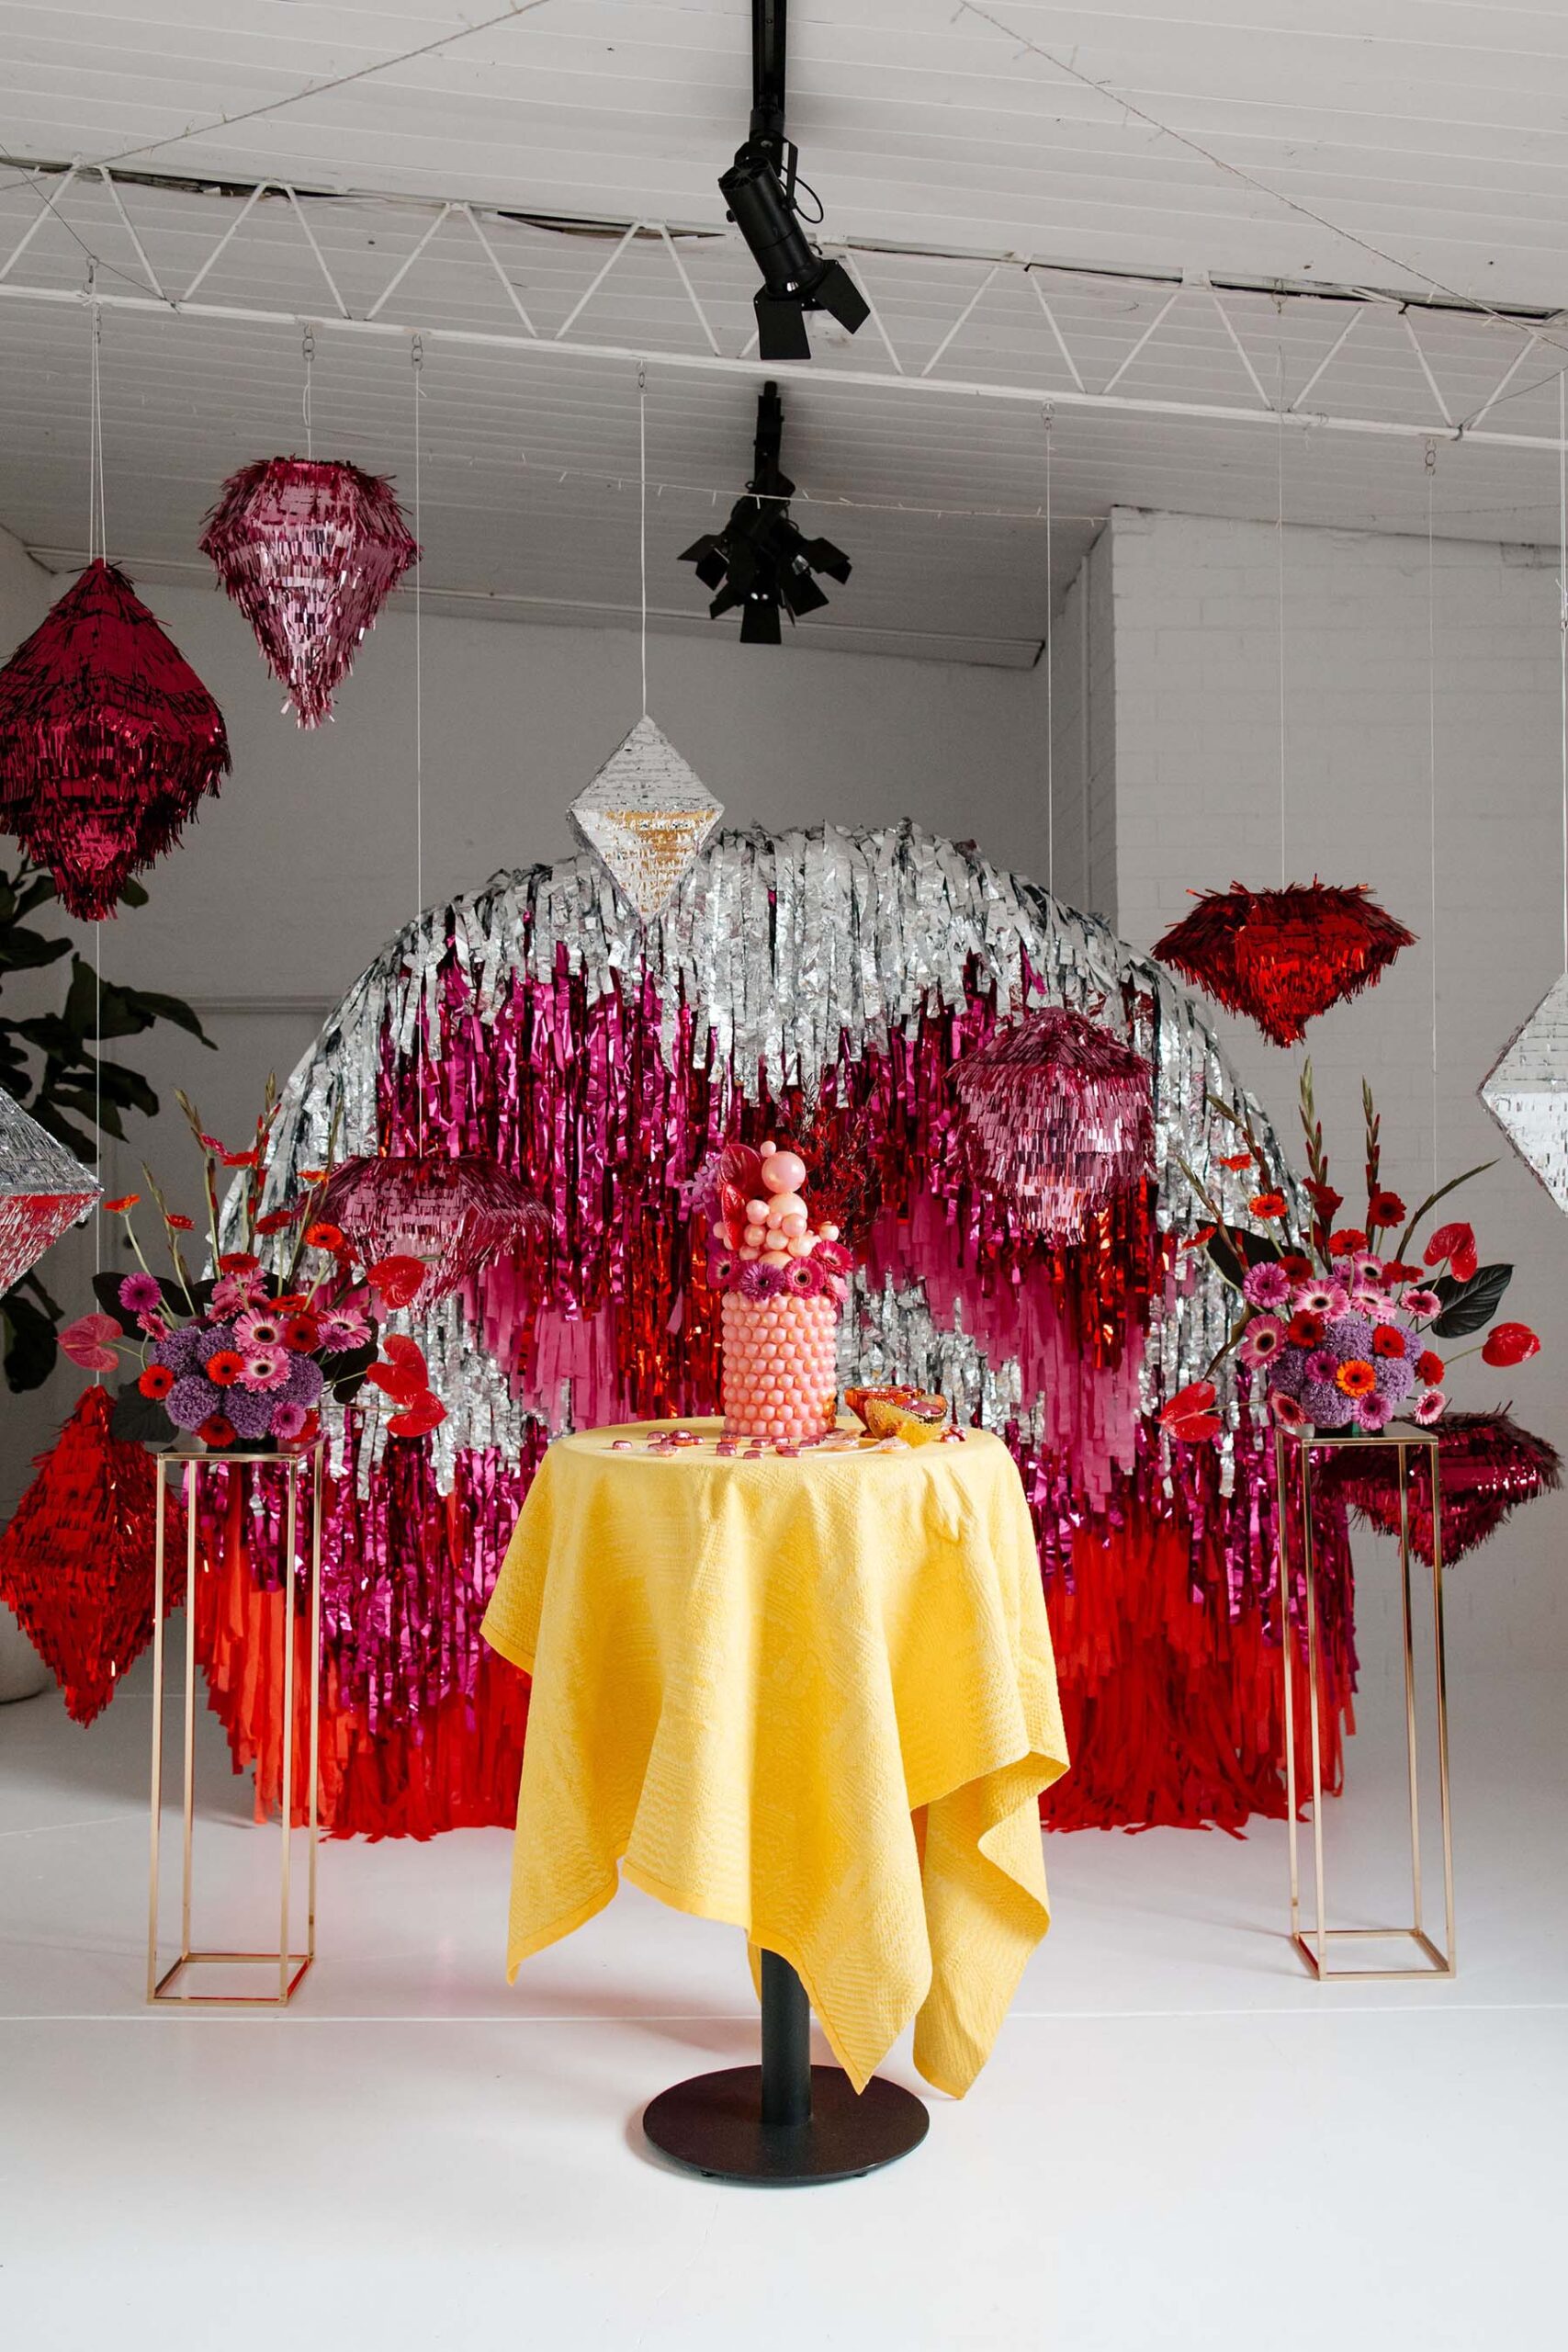 Unique Pink Cake by Dans Bake Lab display